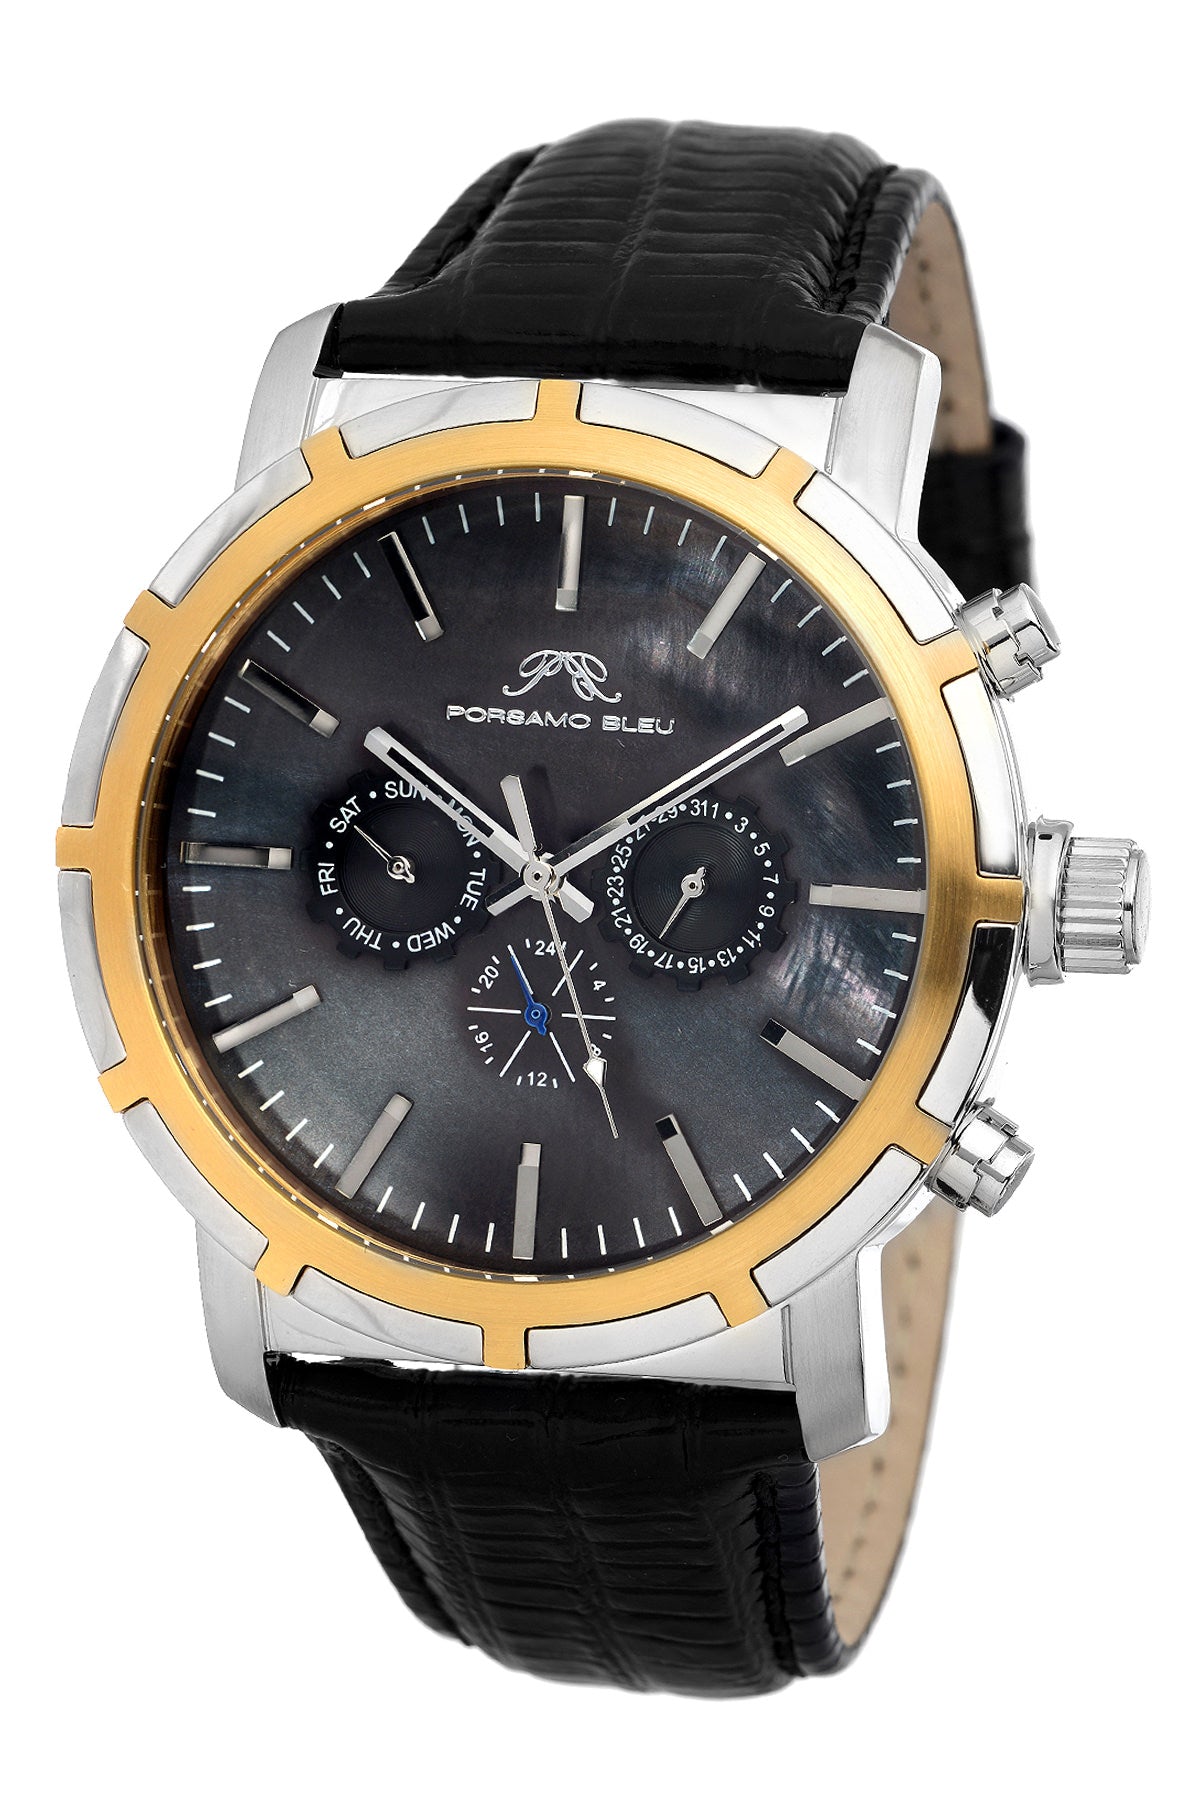 Porsamo Bleu NYC luxury men's watch, genuine leather band, silver, gold, black 051DNYL